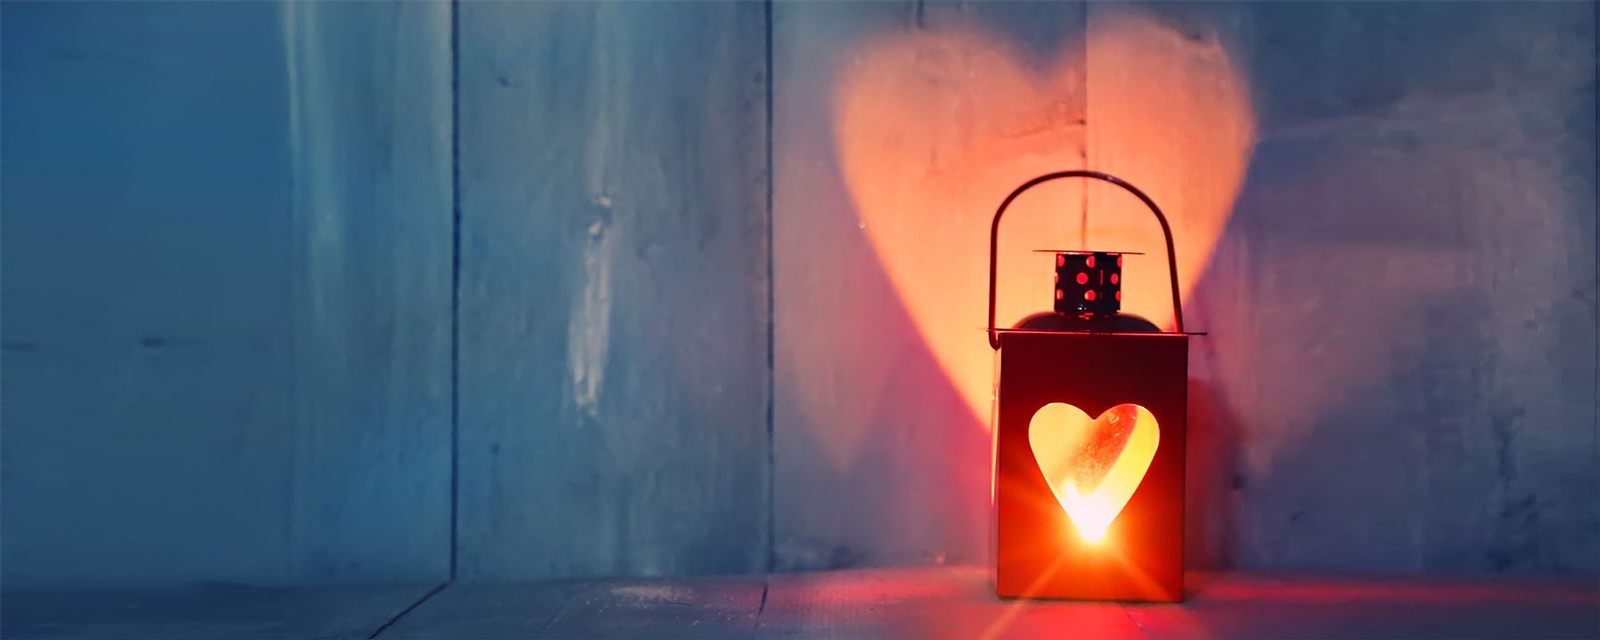 lantern light with heart